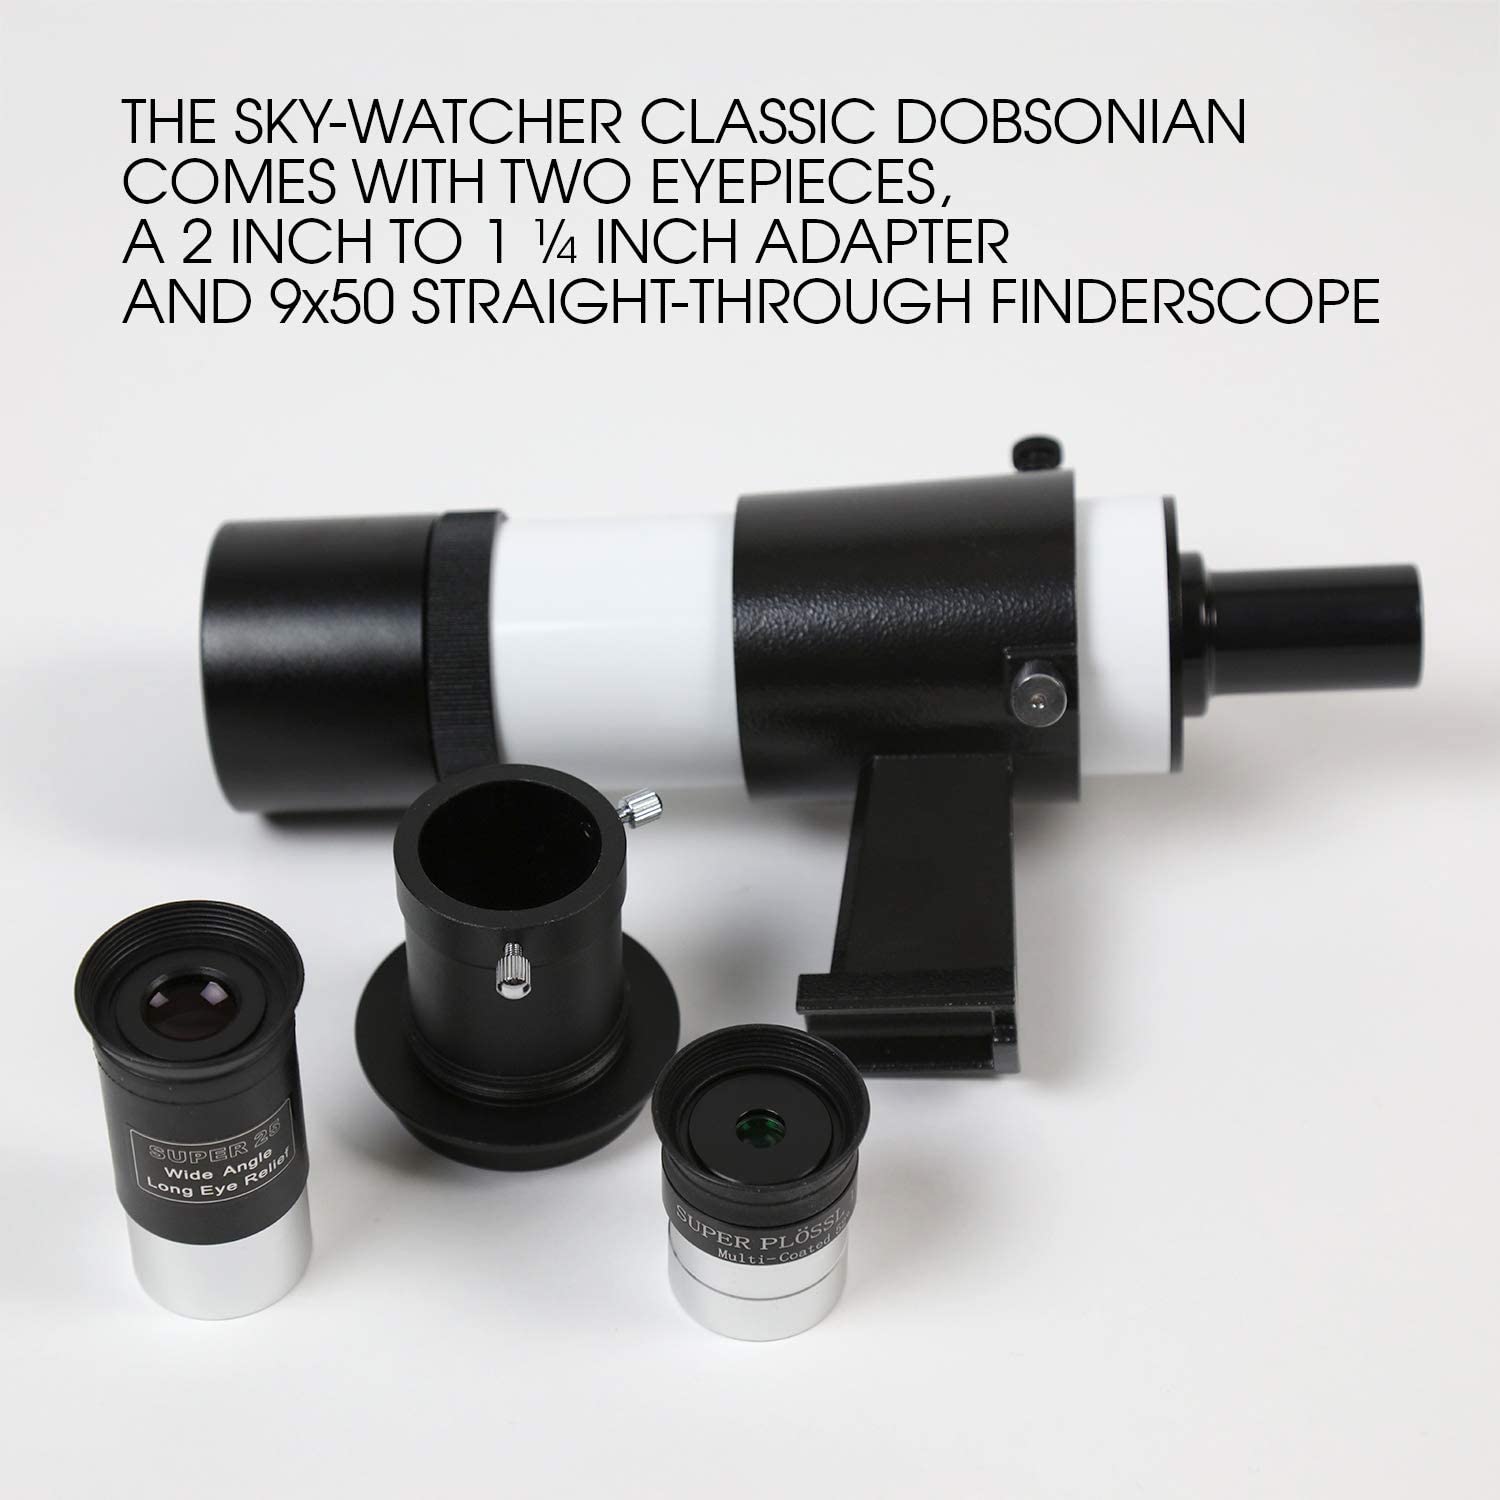 Sky-Watcher Classic 200 Dobsonian 8-inch Telescope Review - Telescopes Sky Watcher Classic 200 Dobsonian 8-inch Aperture Telescope